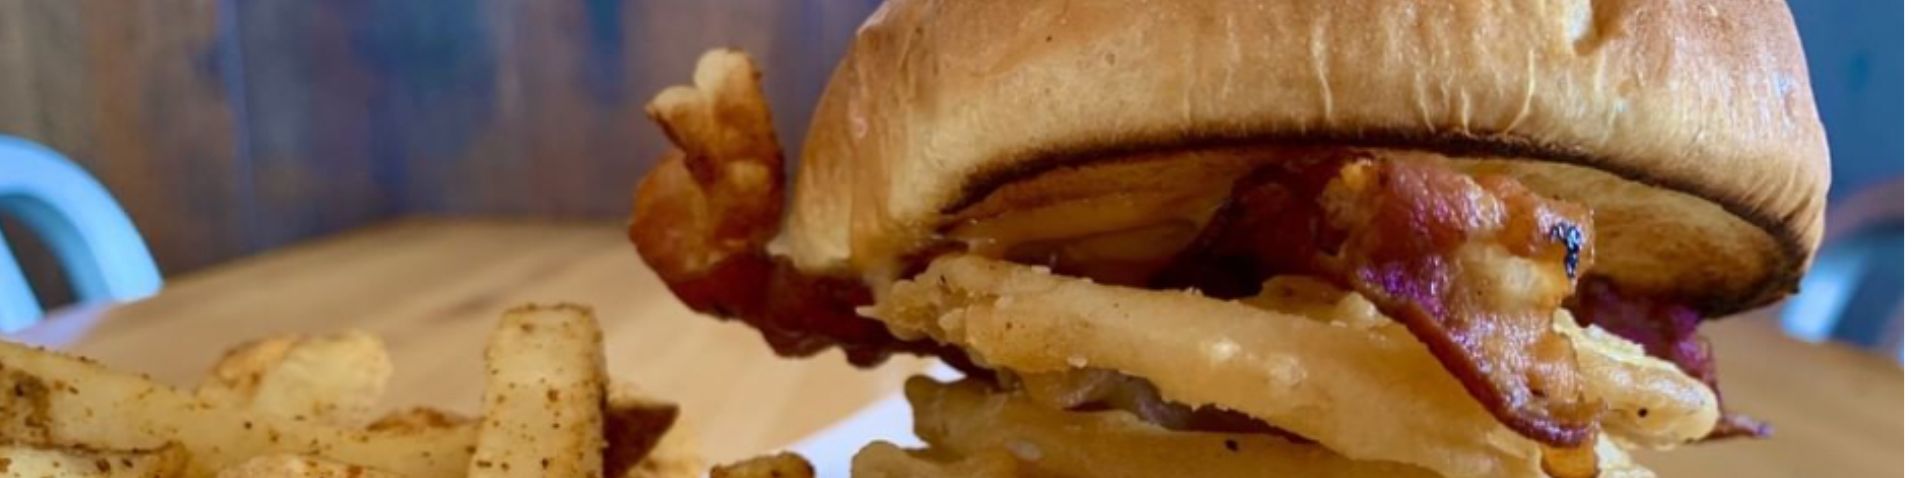 close-up of burger and fries